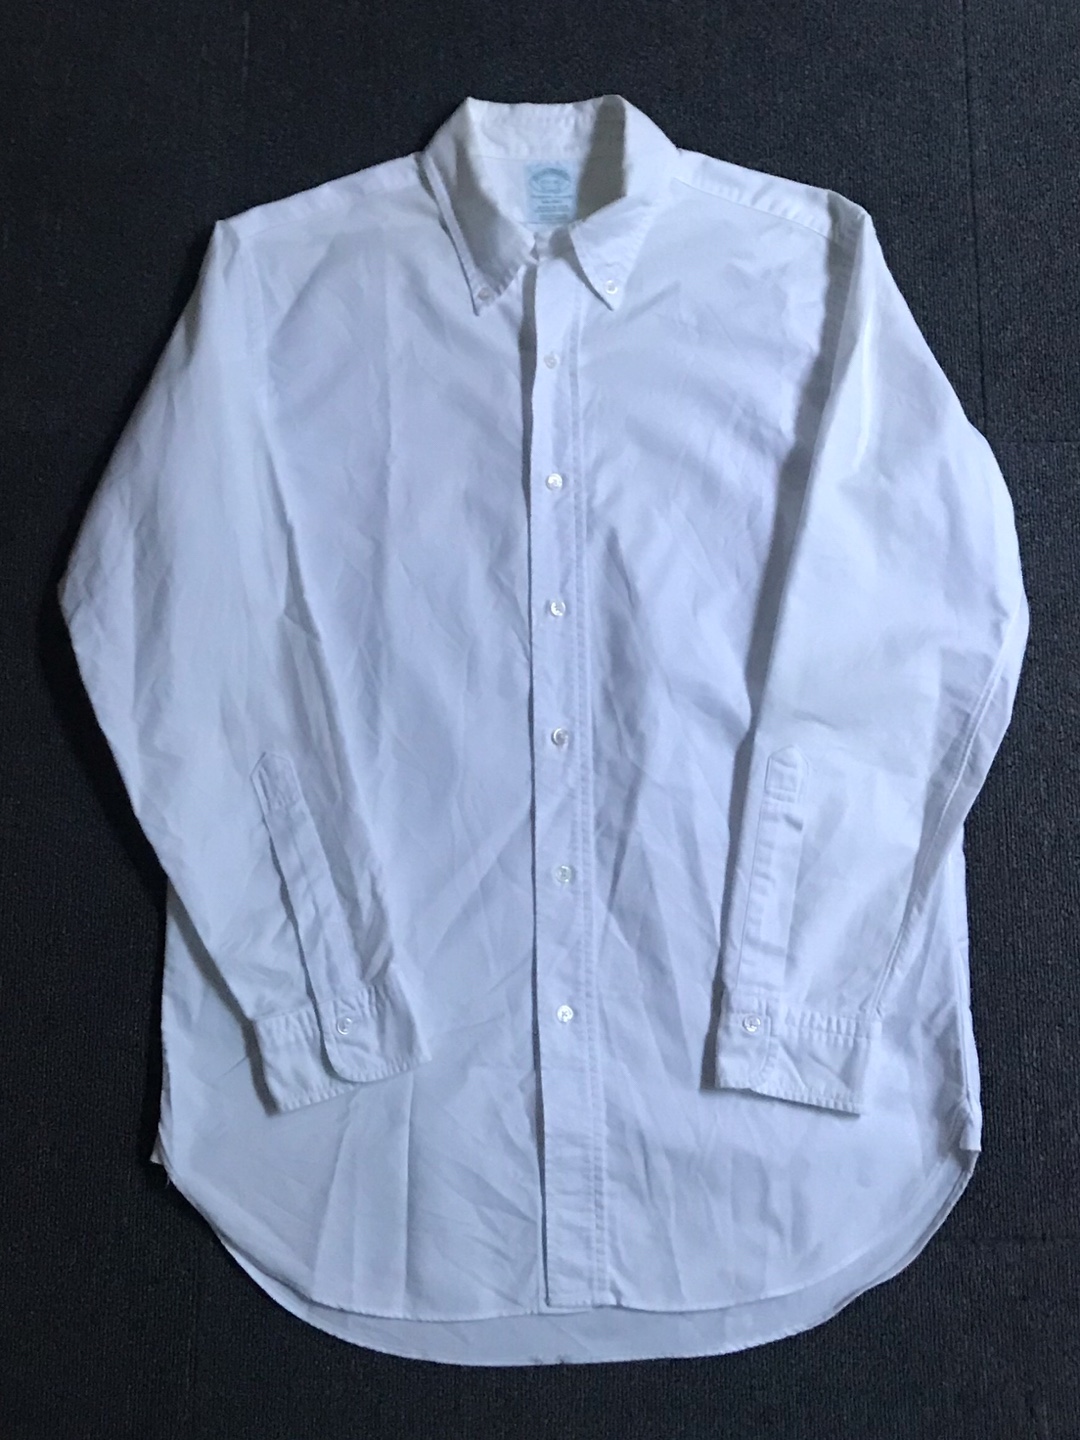 brooks brothers milano ocbd shirt USA made (15 1/2-32 size, ~100 추천)